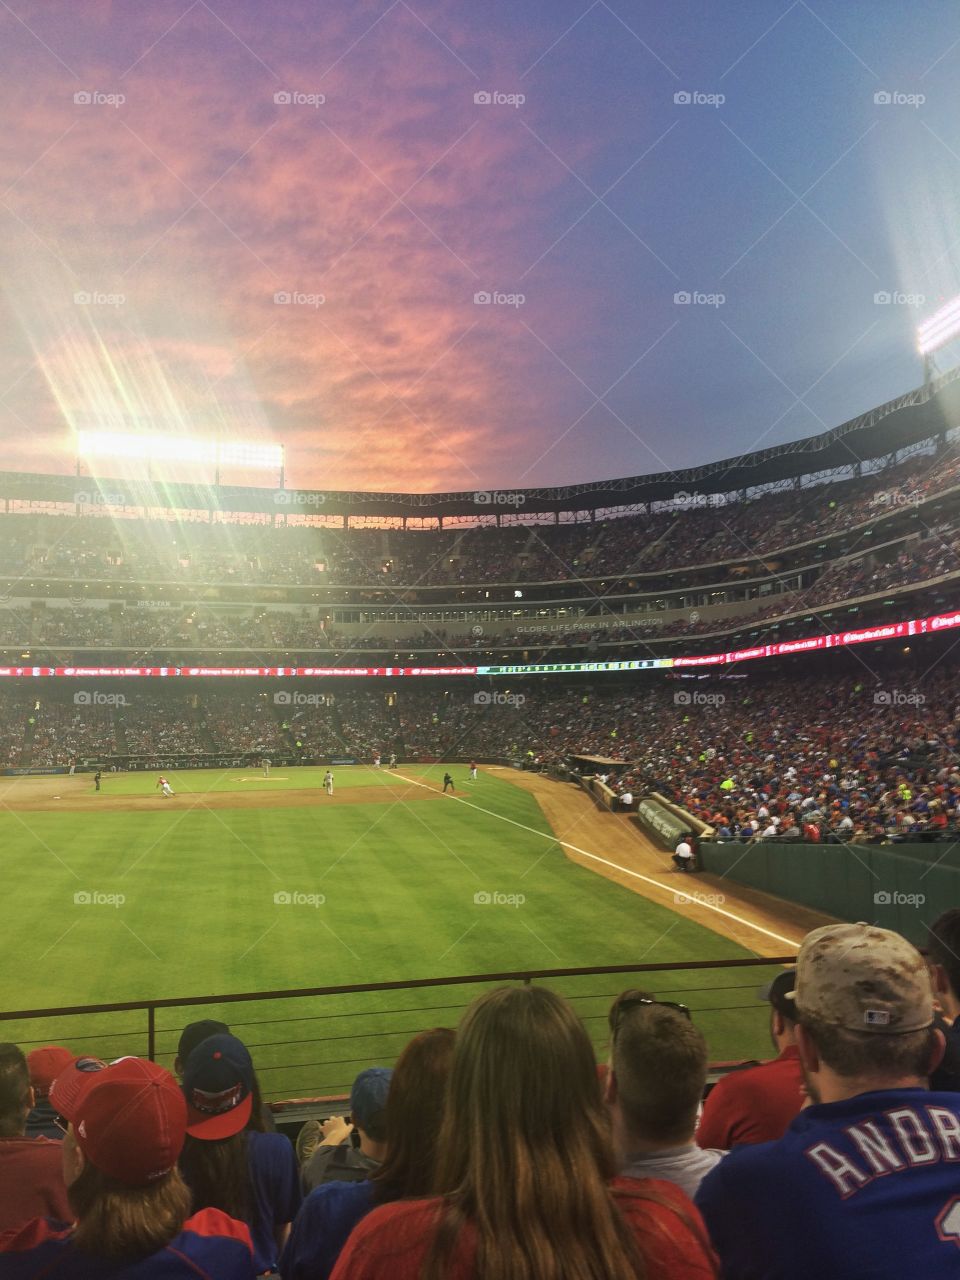 Dusk by Rangers. Baseball Sunset, Arlington, TX